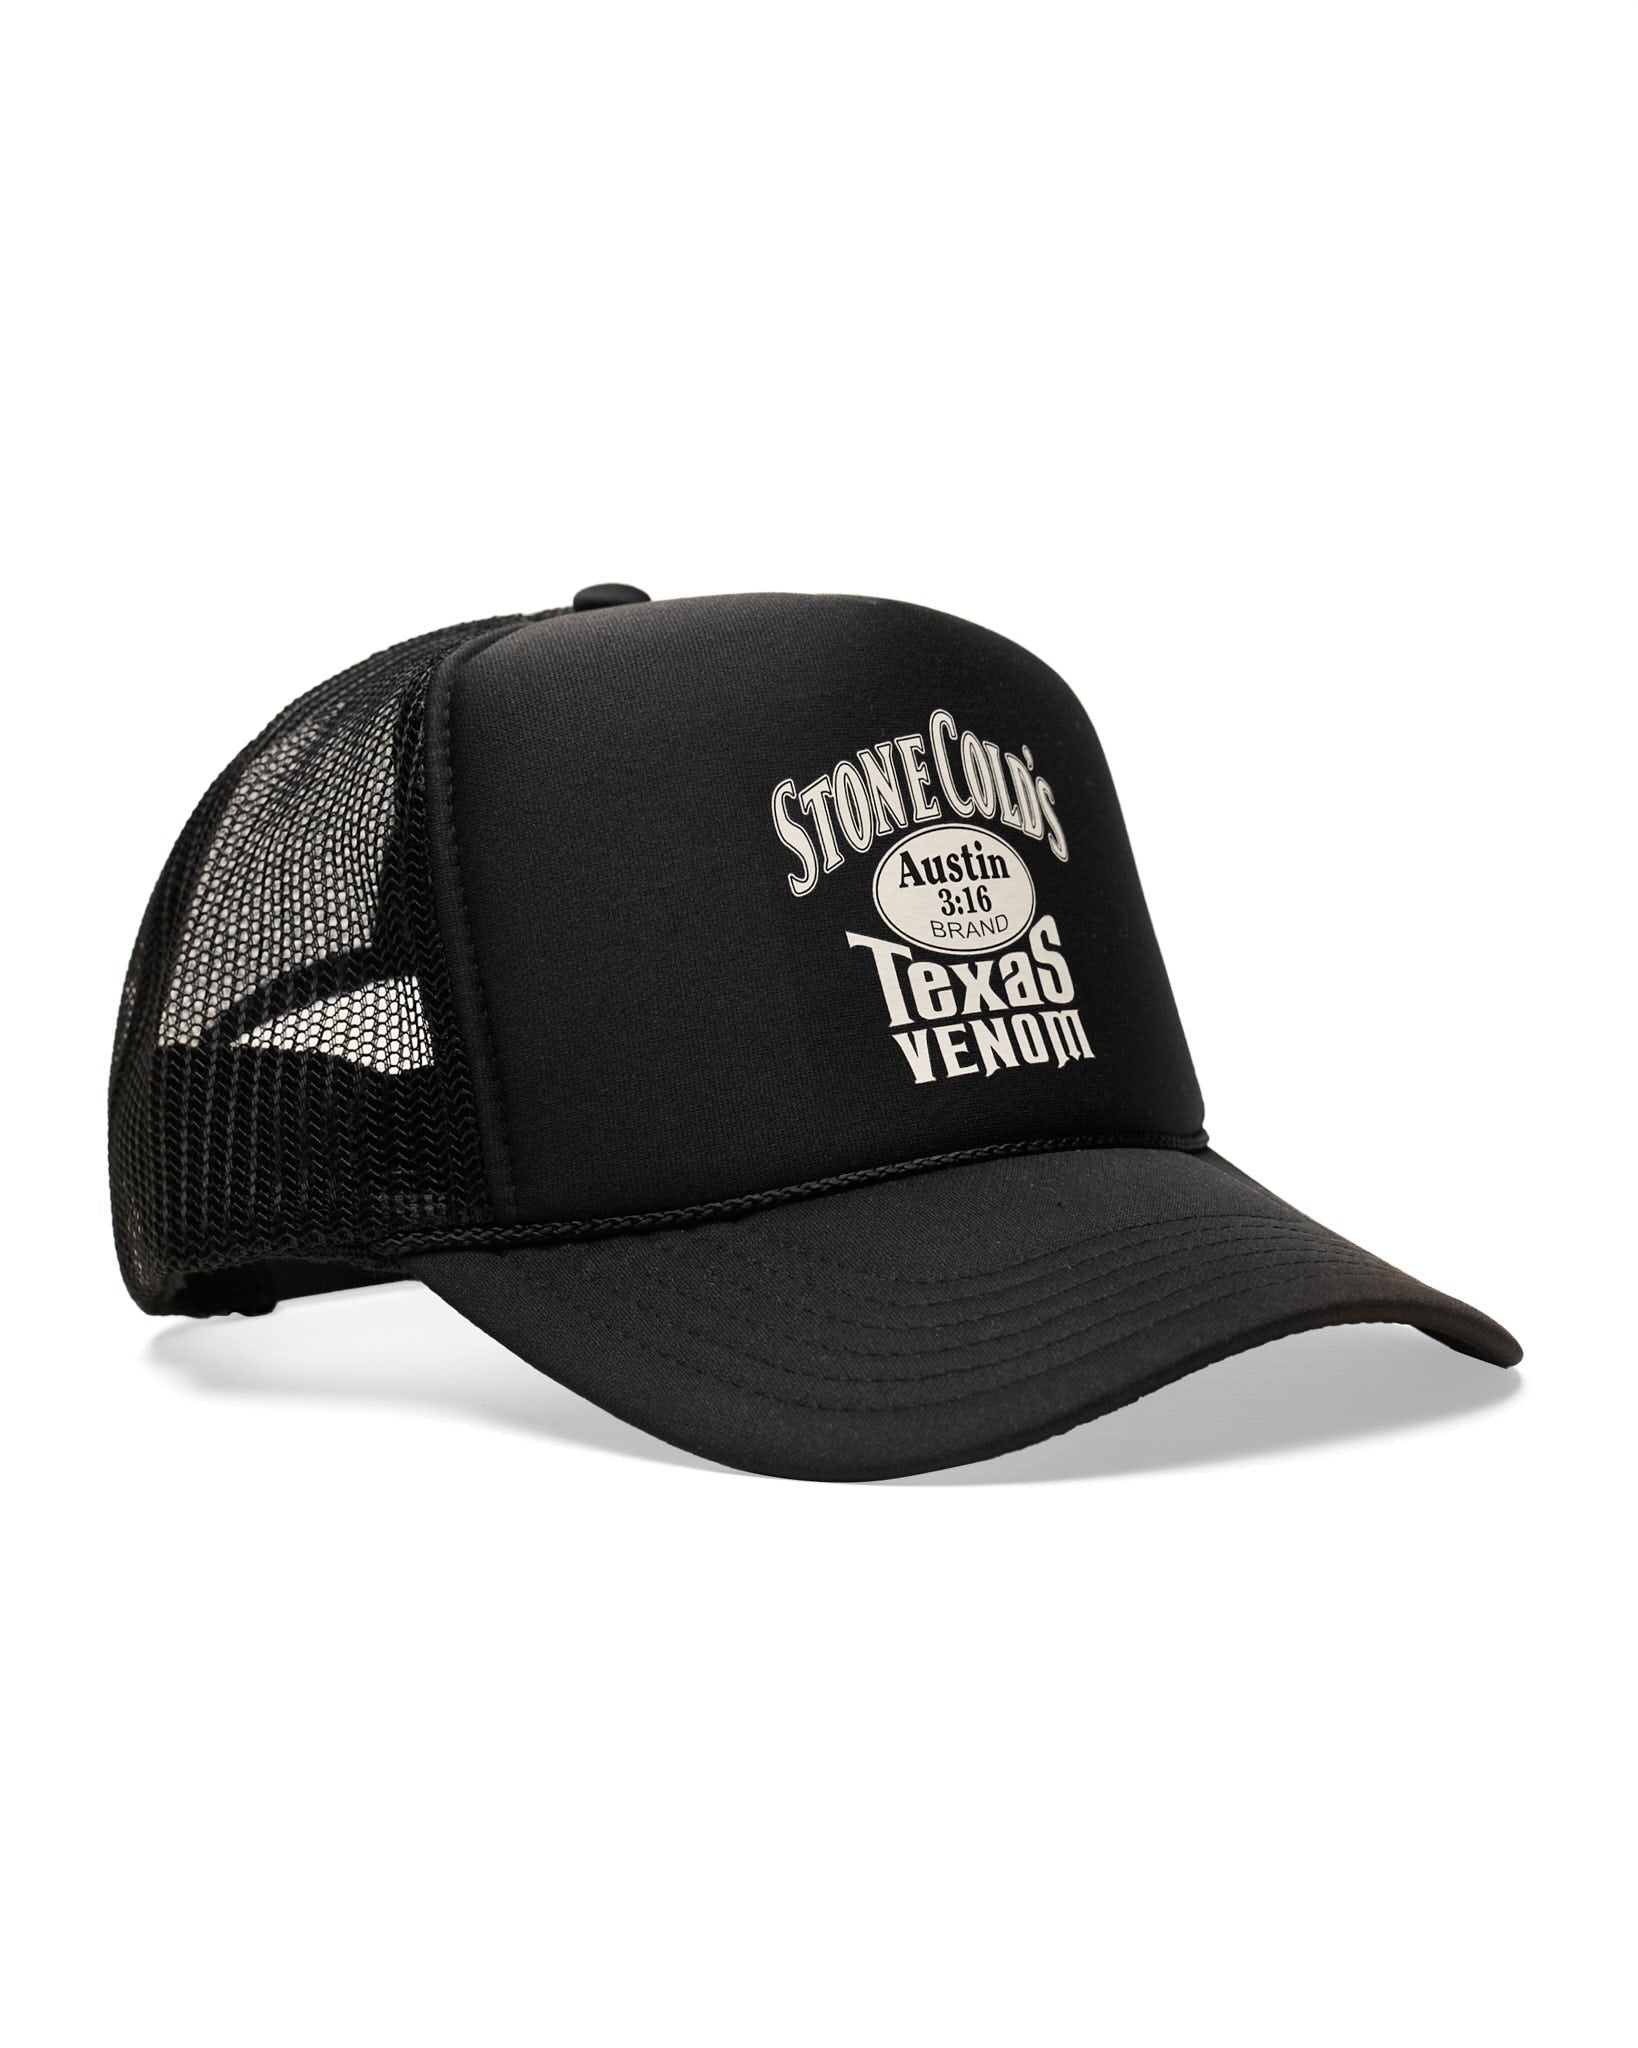 Stone Cold Steve Austin Texas Venom Trucker Hat